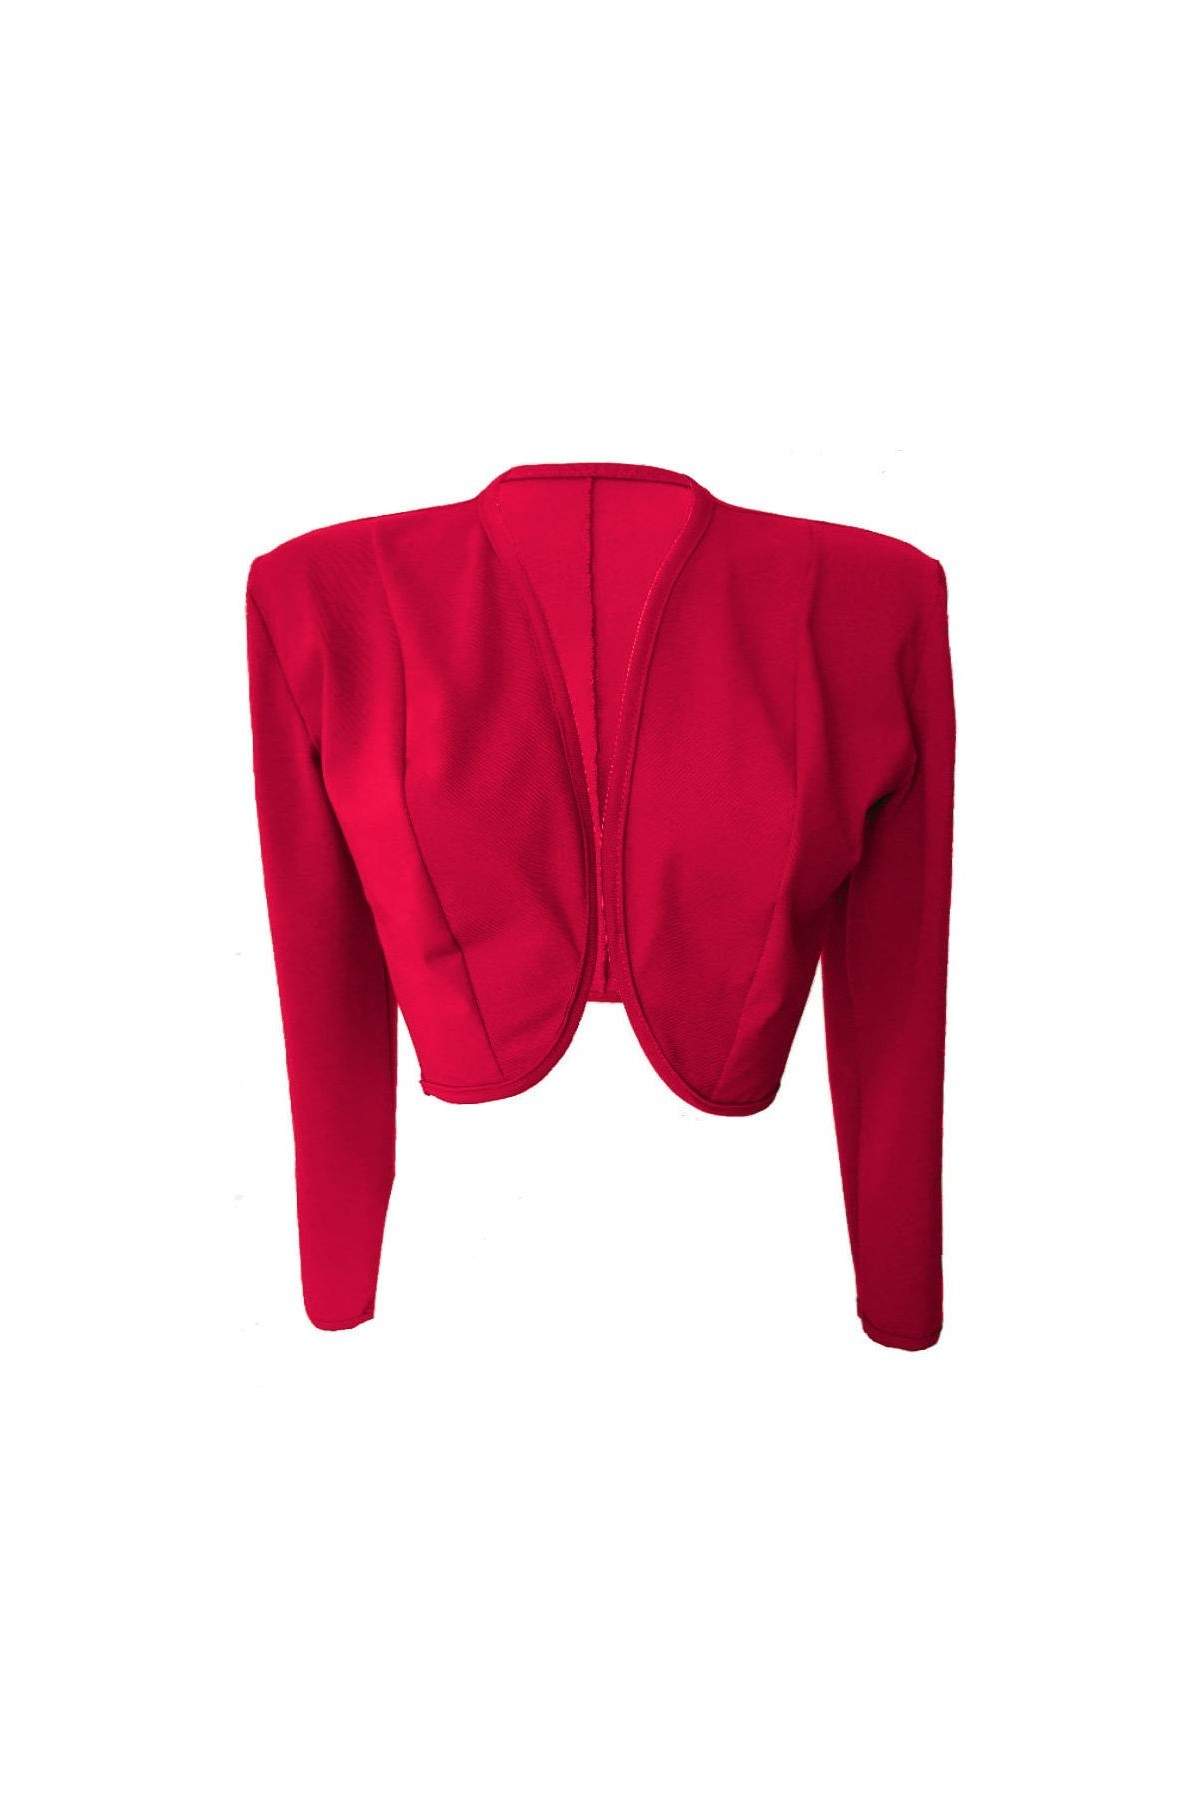 black week Save 15% Red Cotton Stretch Short Jacket - 